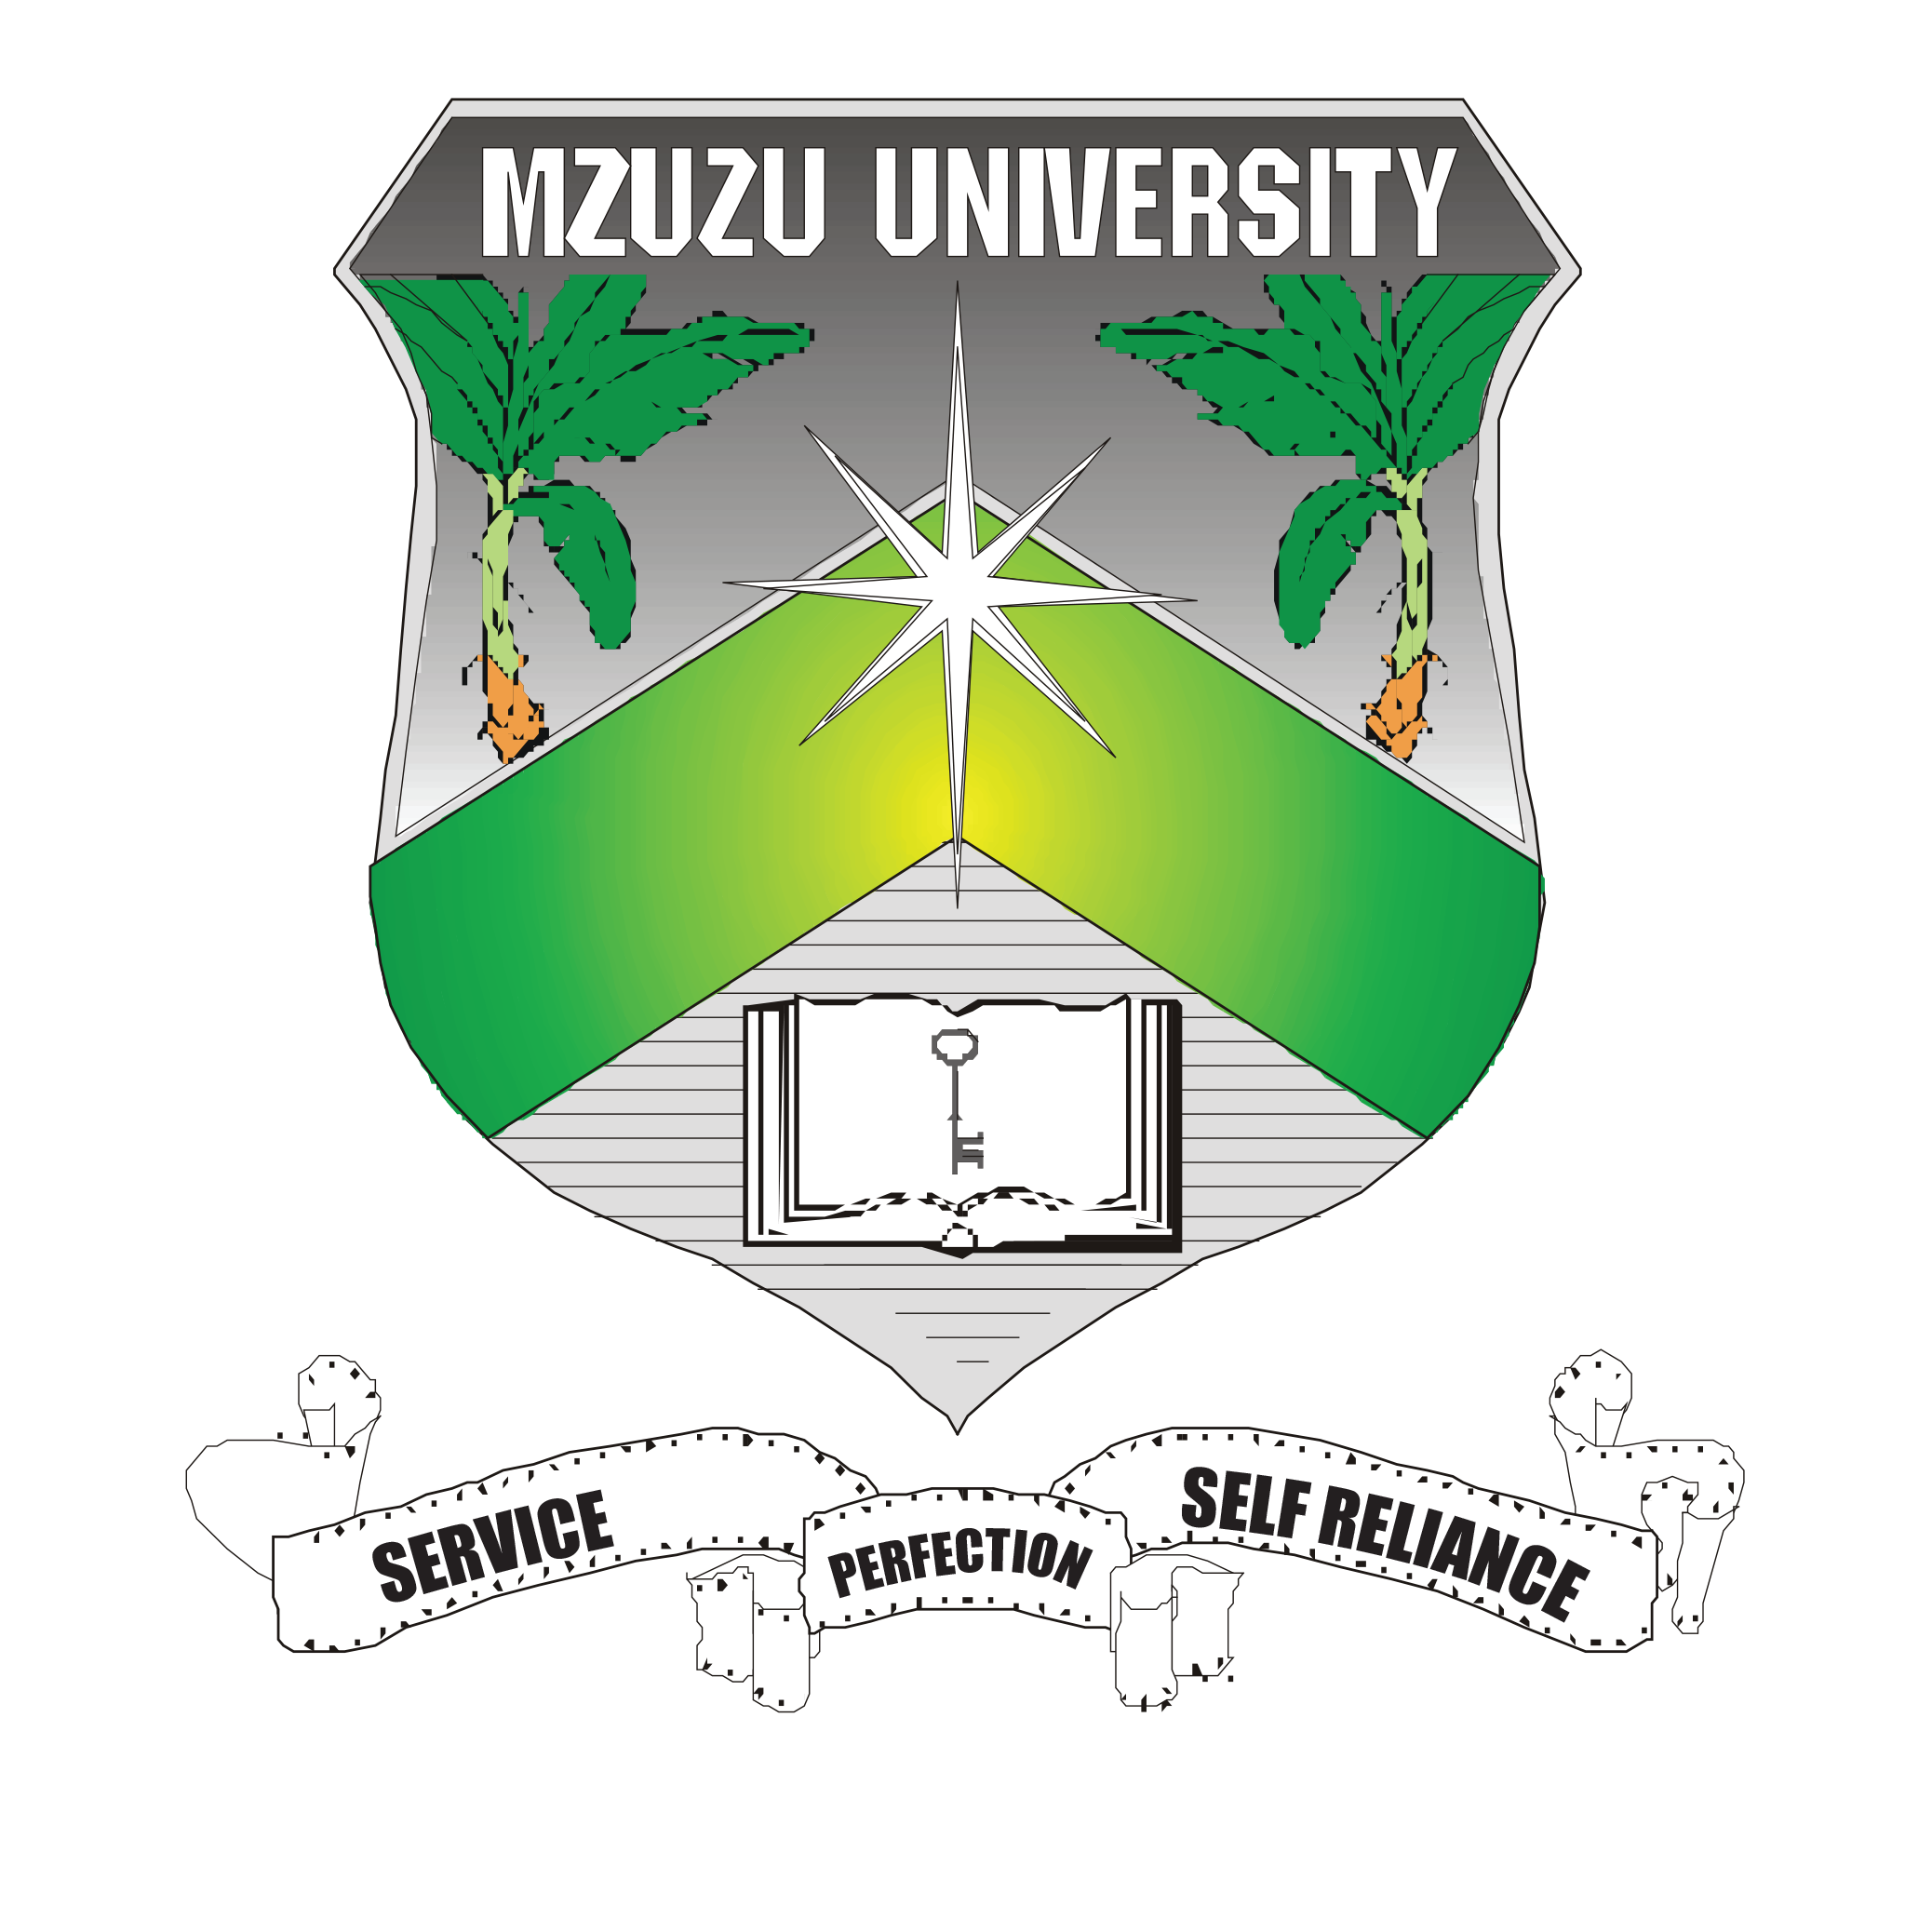 MZUZU UNIVERSITY